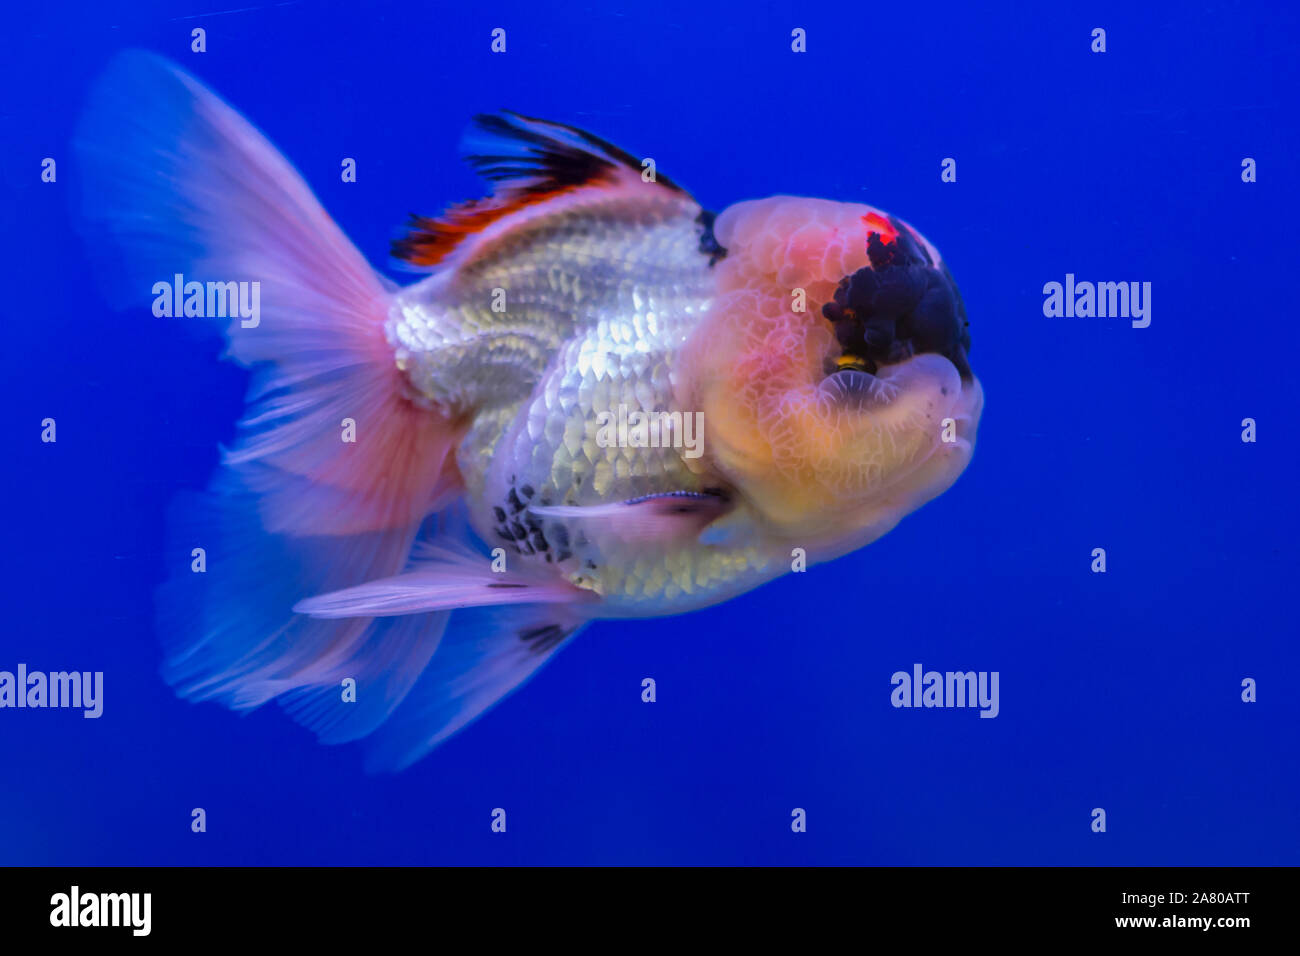 Lionhead goldfish with blue background Stock Photo